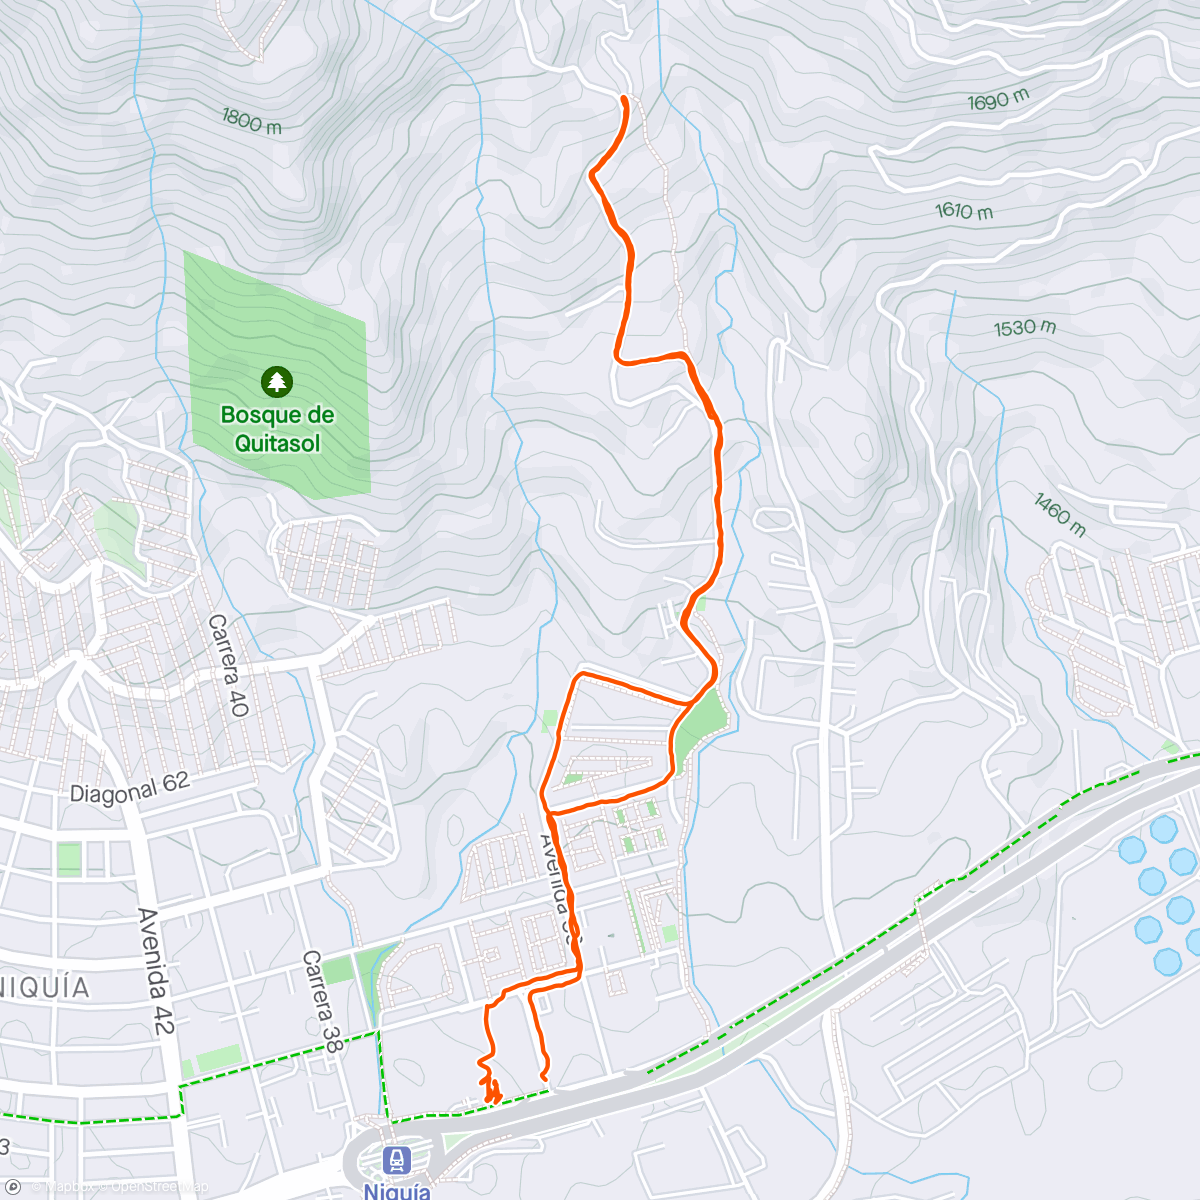 Map of the activity, Caminata con la flaquirris